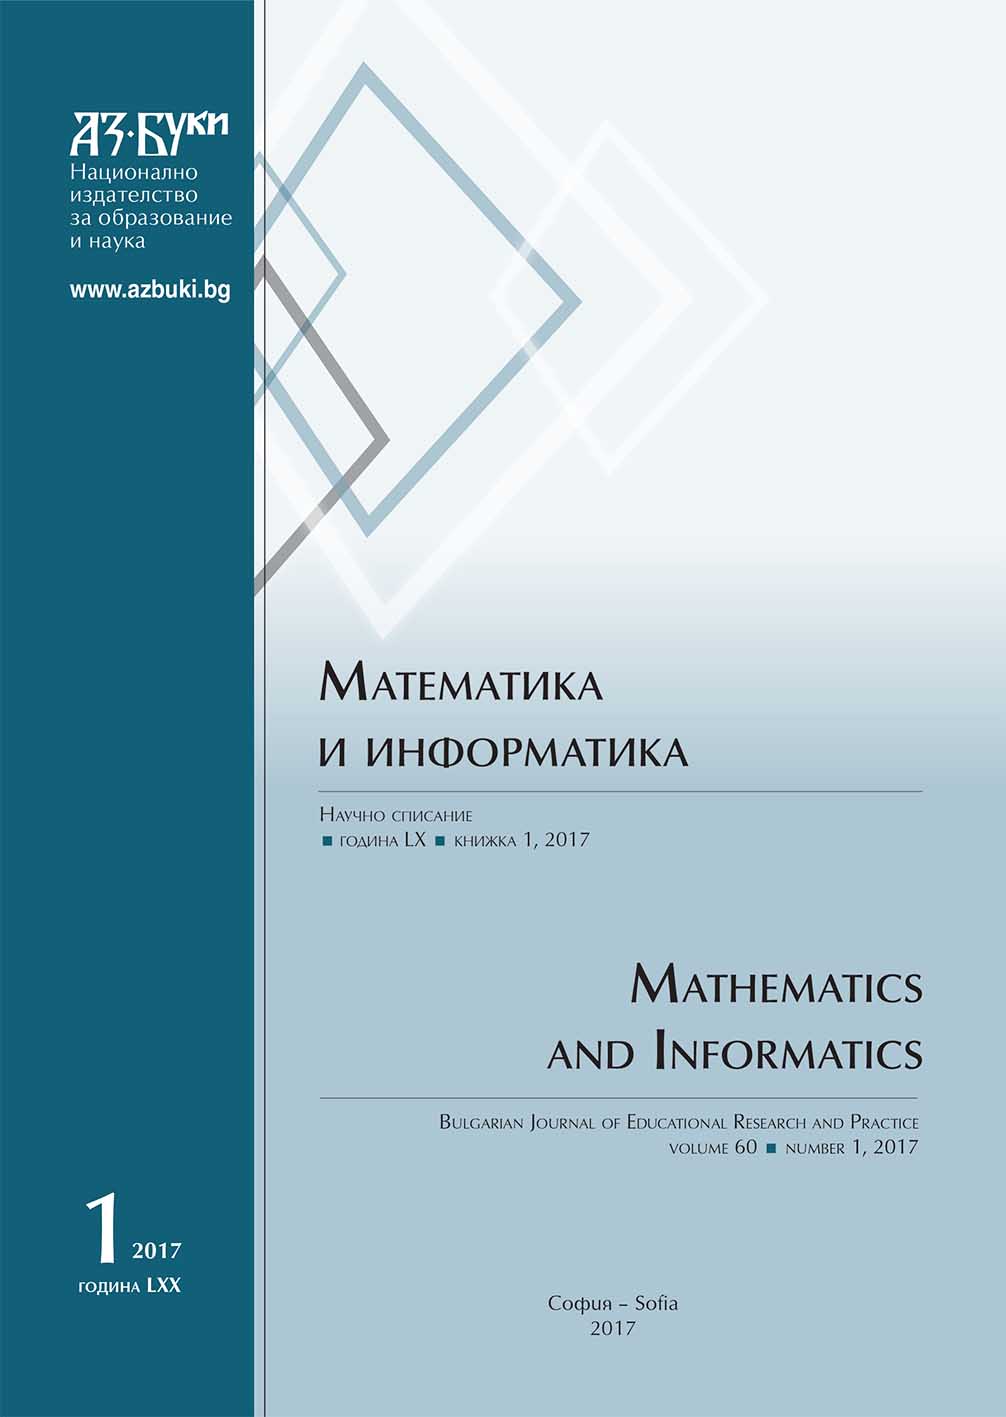 Development of the Didactics of Mathematics Cover Image